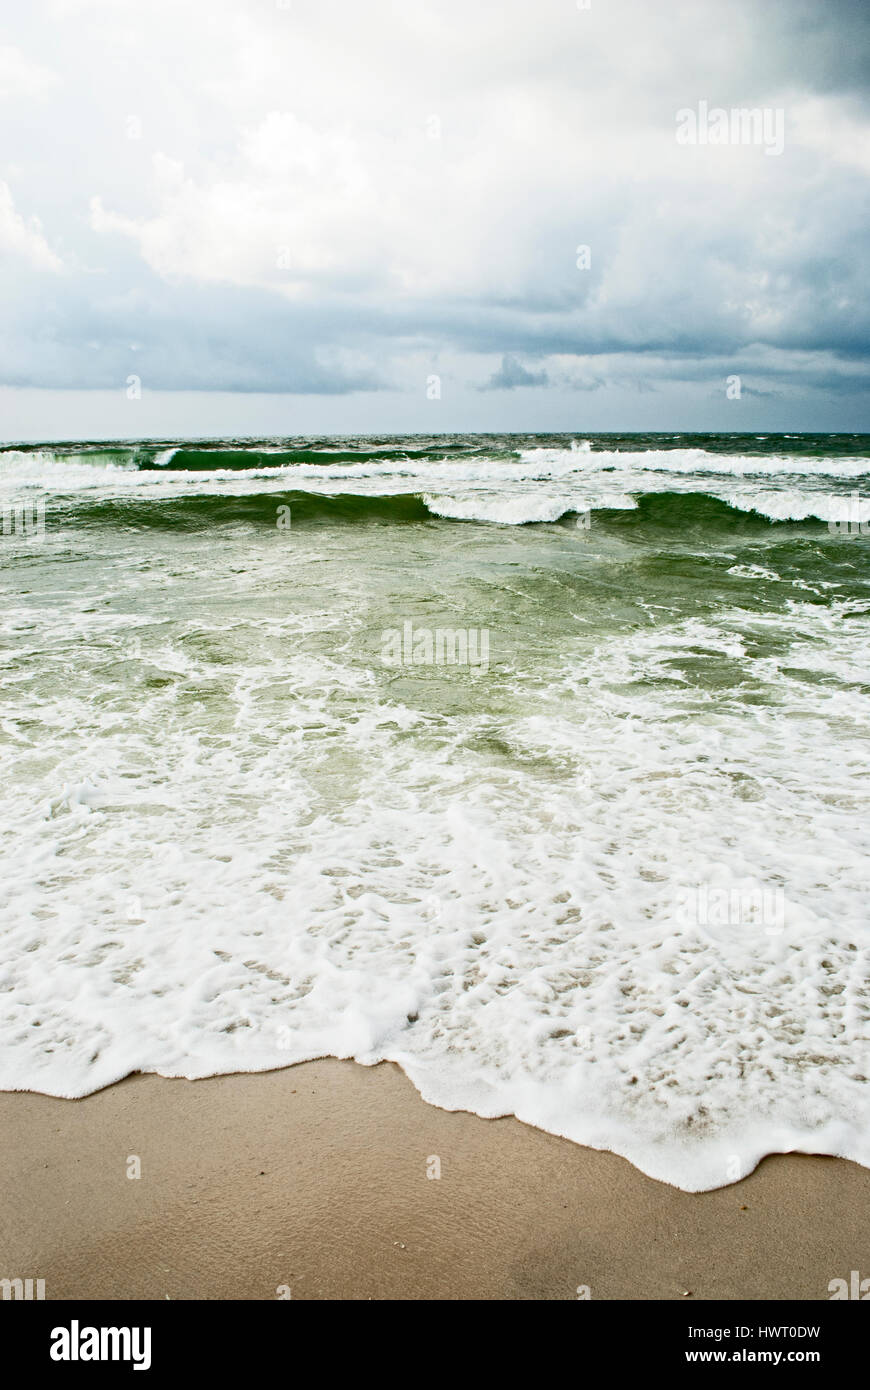 Close-up of waves at beach Stock Photo